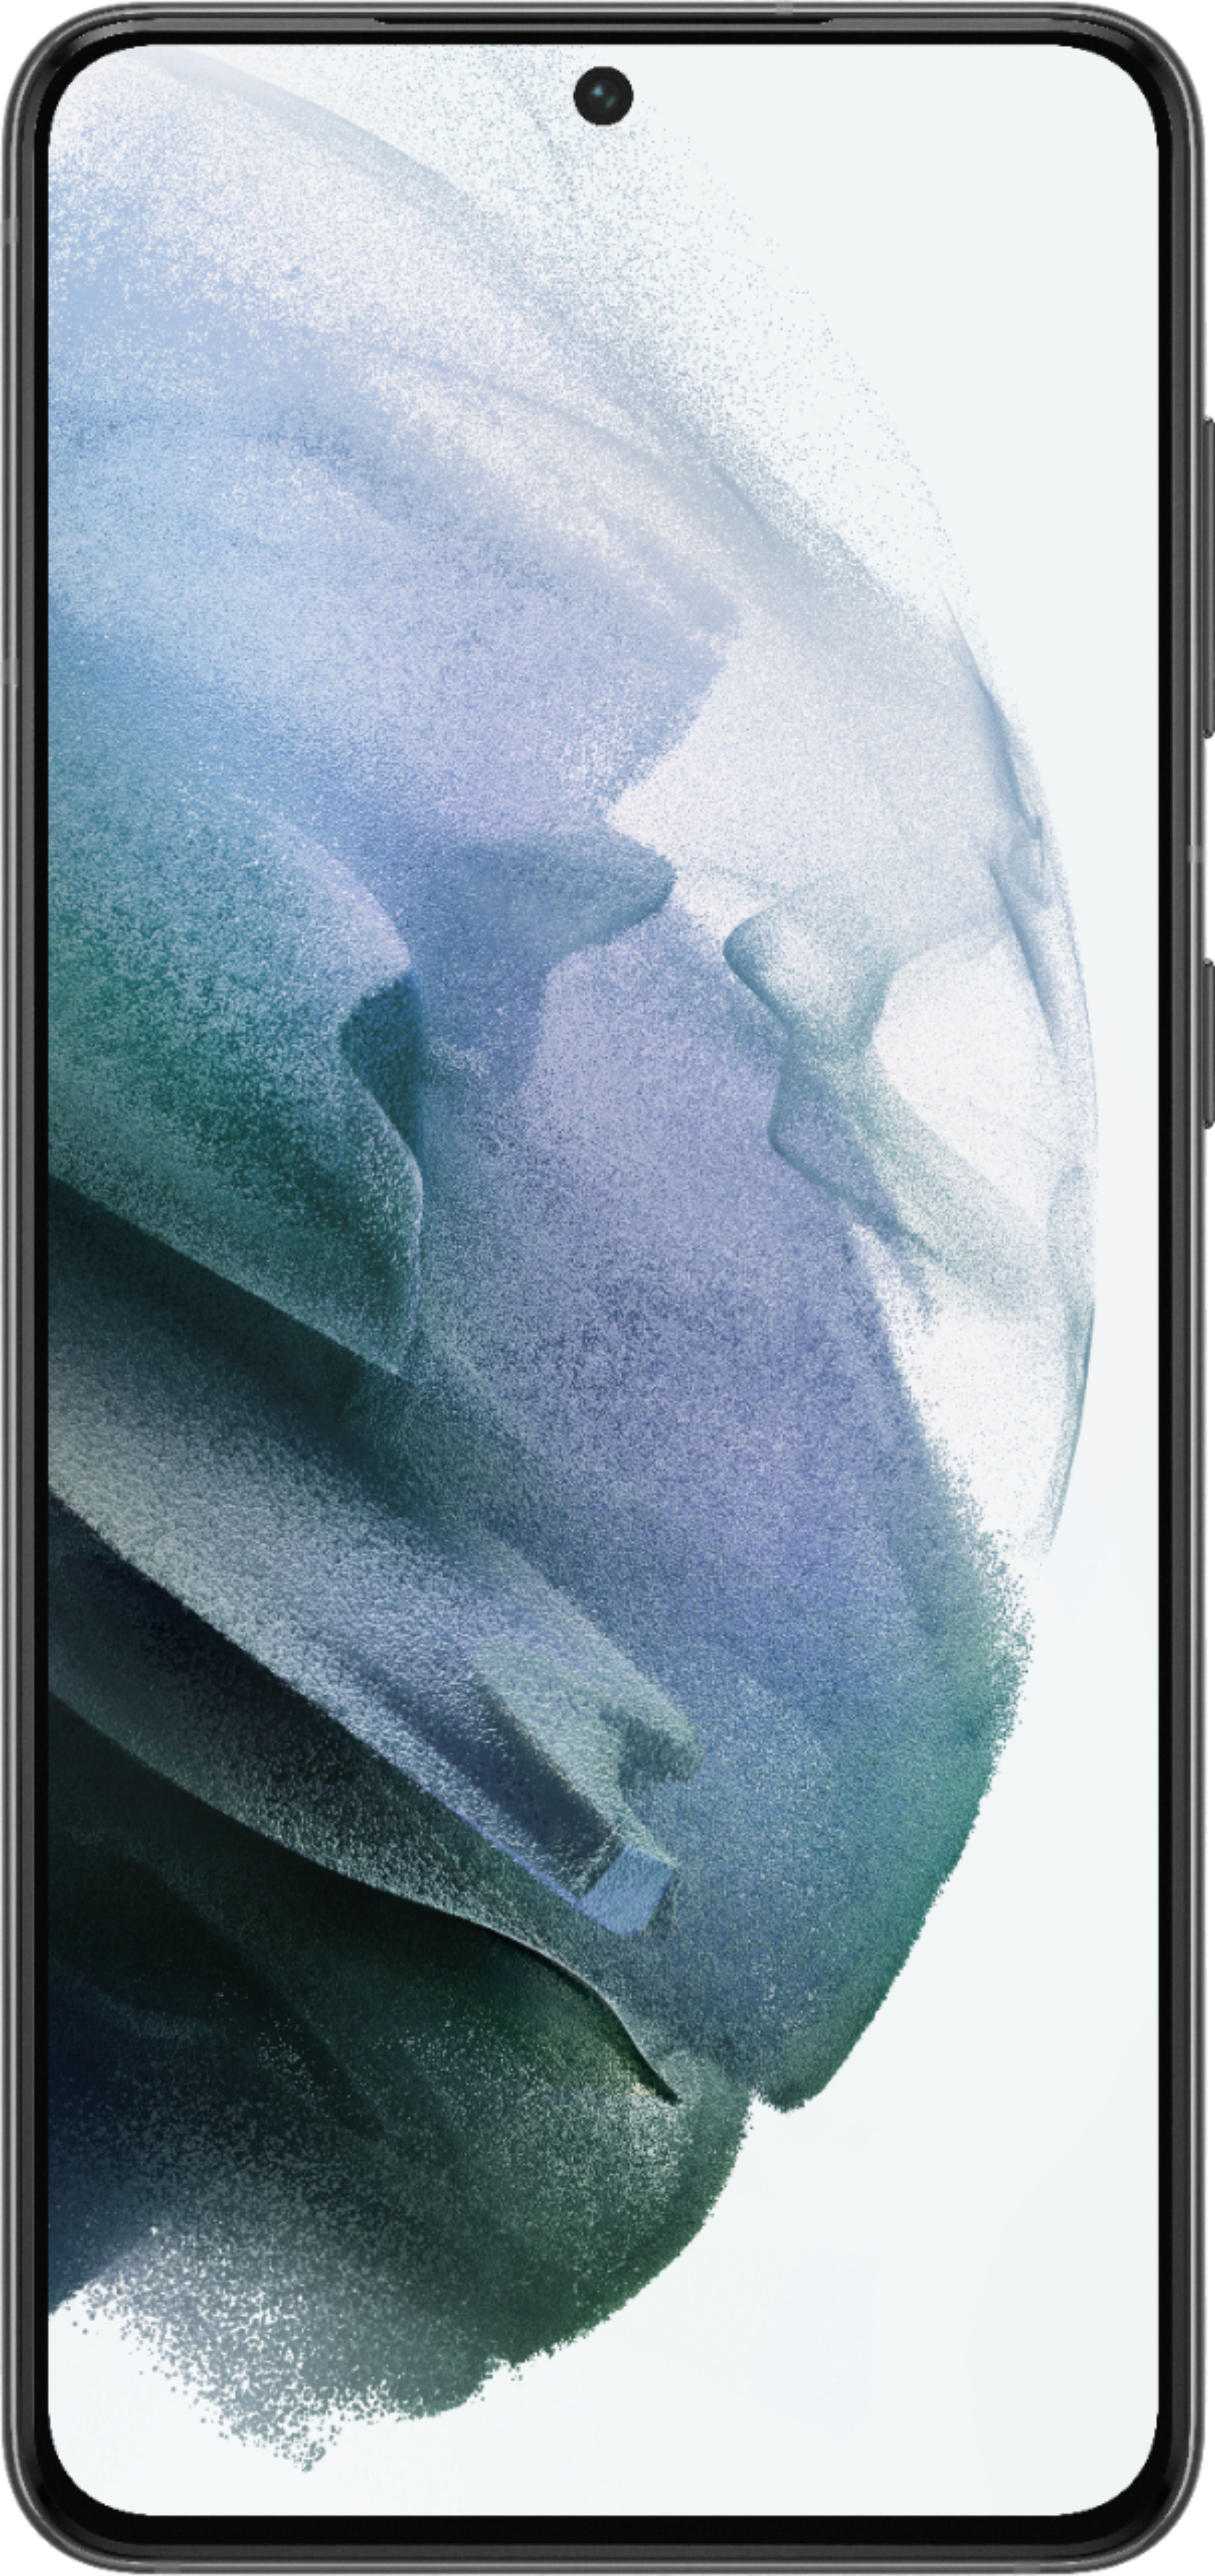 Samsung Galaxy S21 5g G991b 128gb Dual Sim Gsm Unlocked Android Smartphone International Variant Us Compatible Lte Phantom Pink Walmart Com Walmart Com